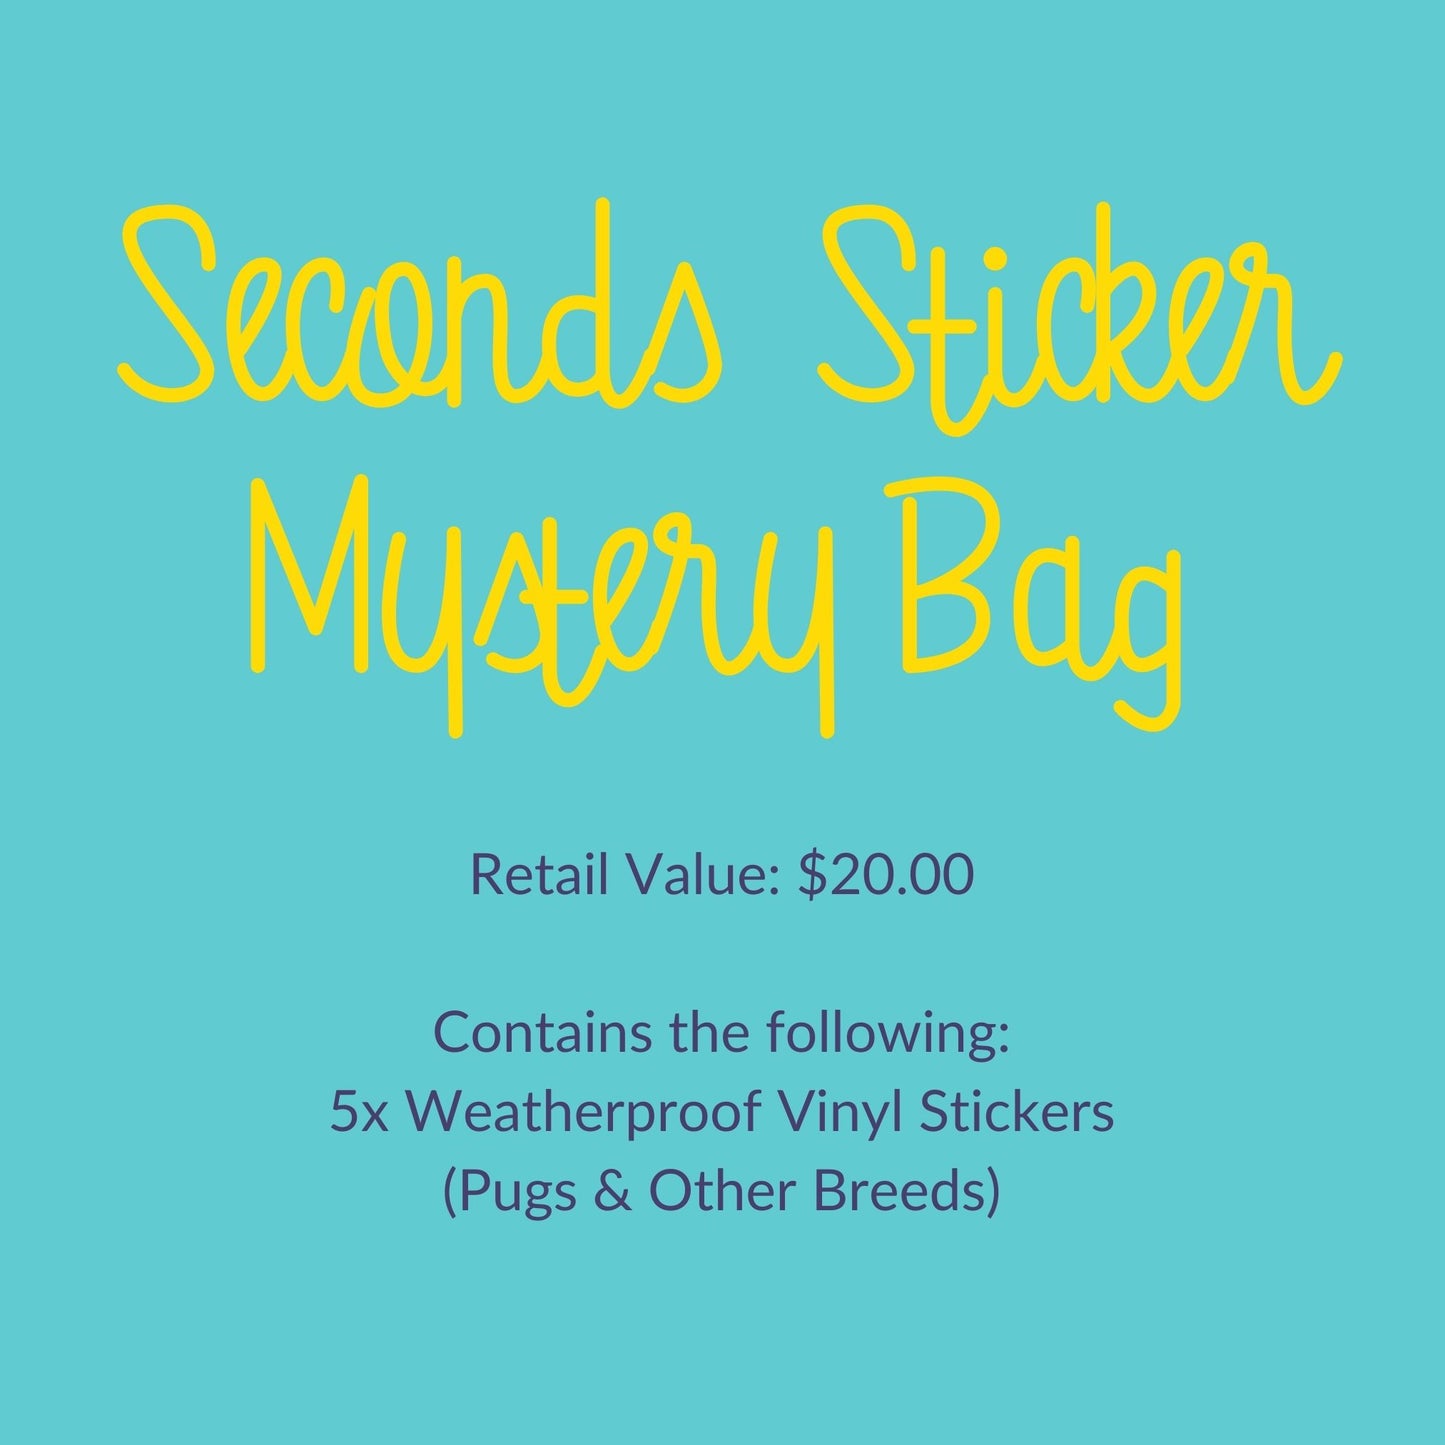 Seconds Sticker Mystery Bag